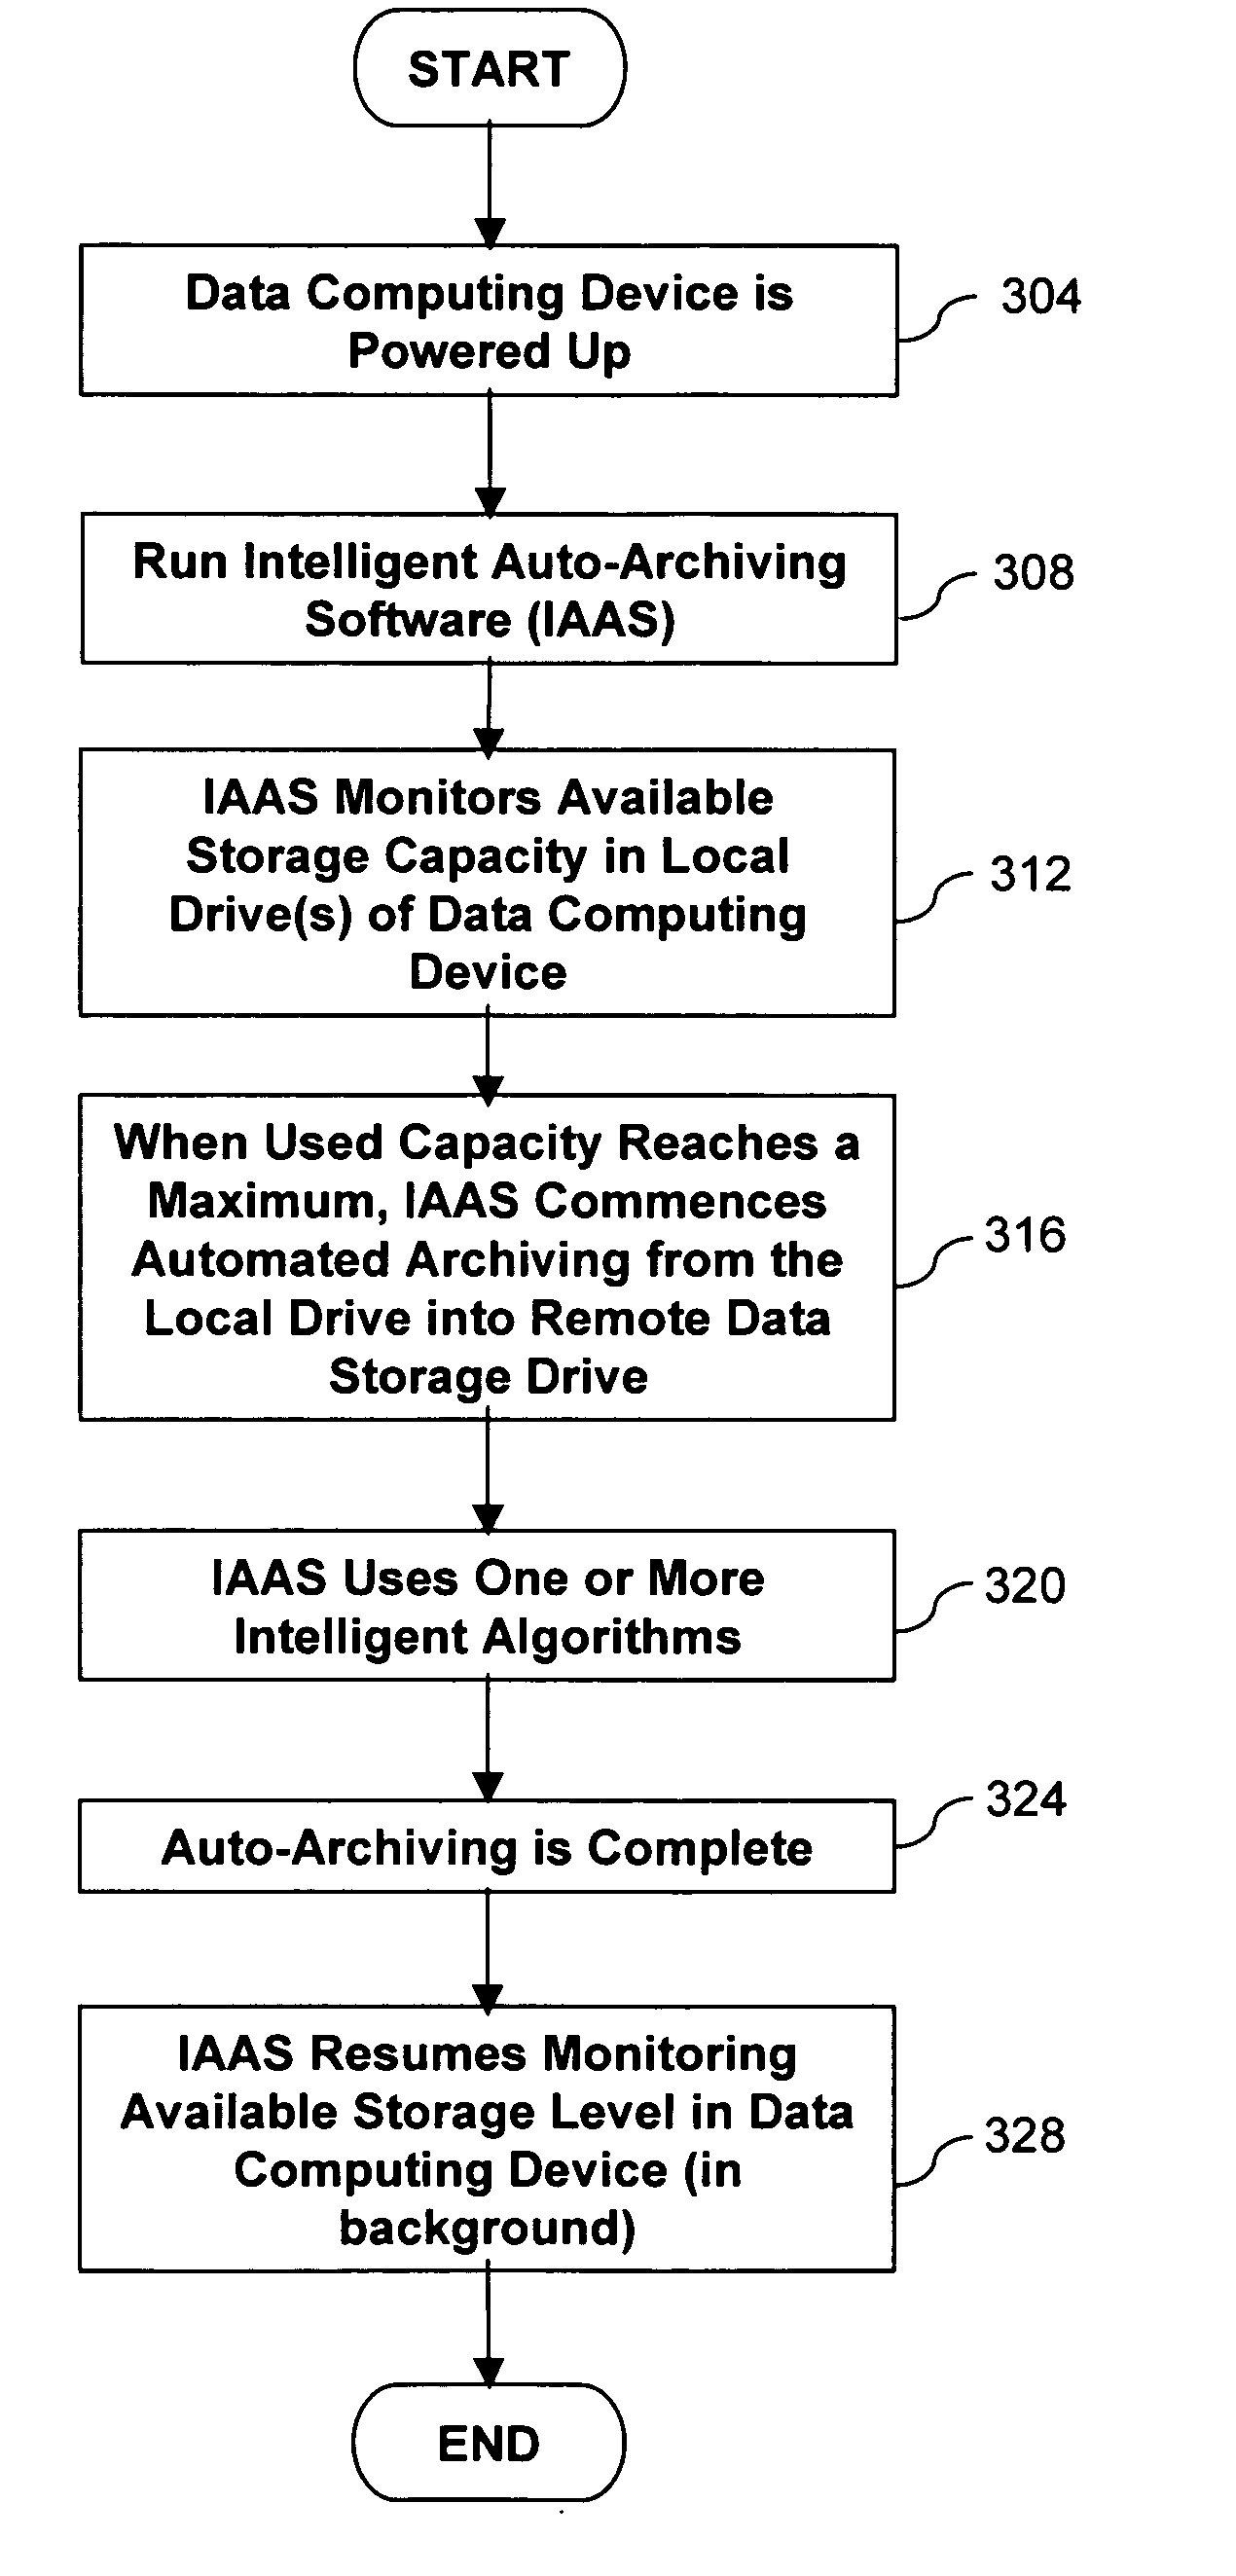 Intelligent auto-archiving